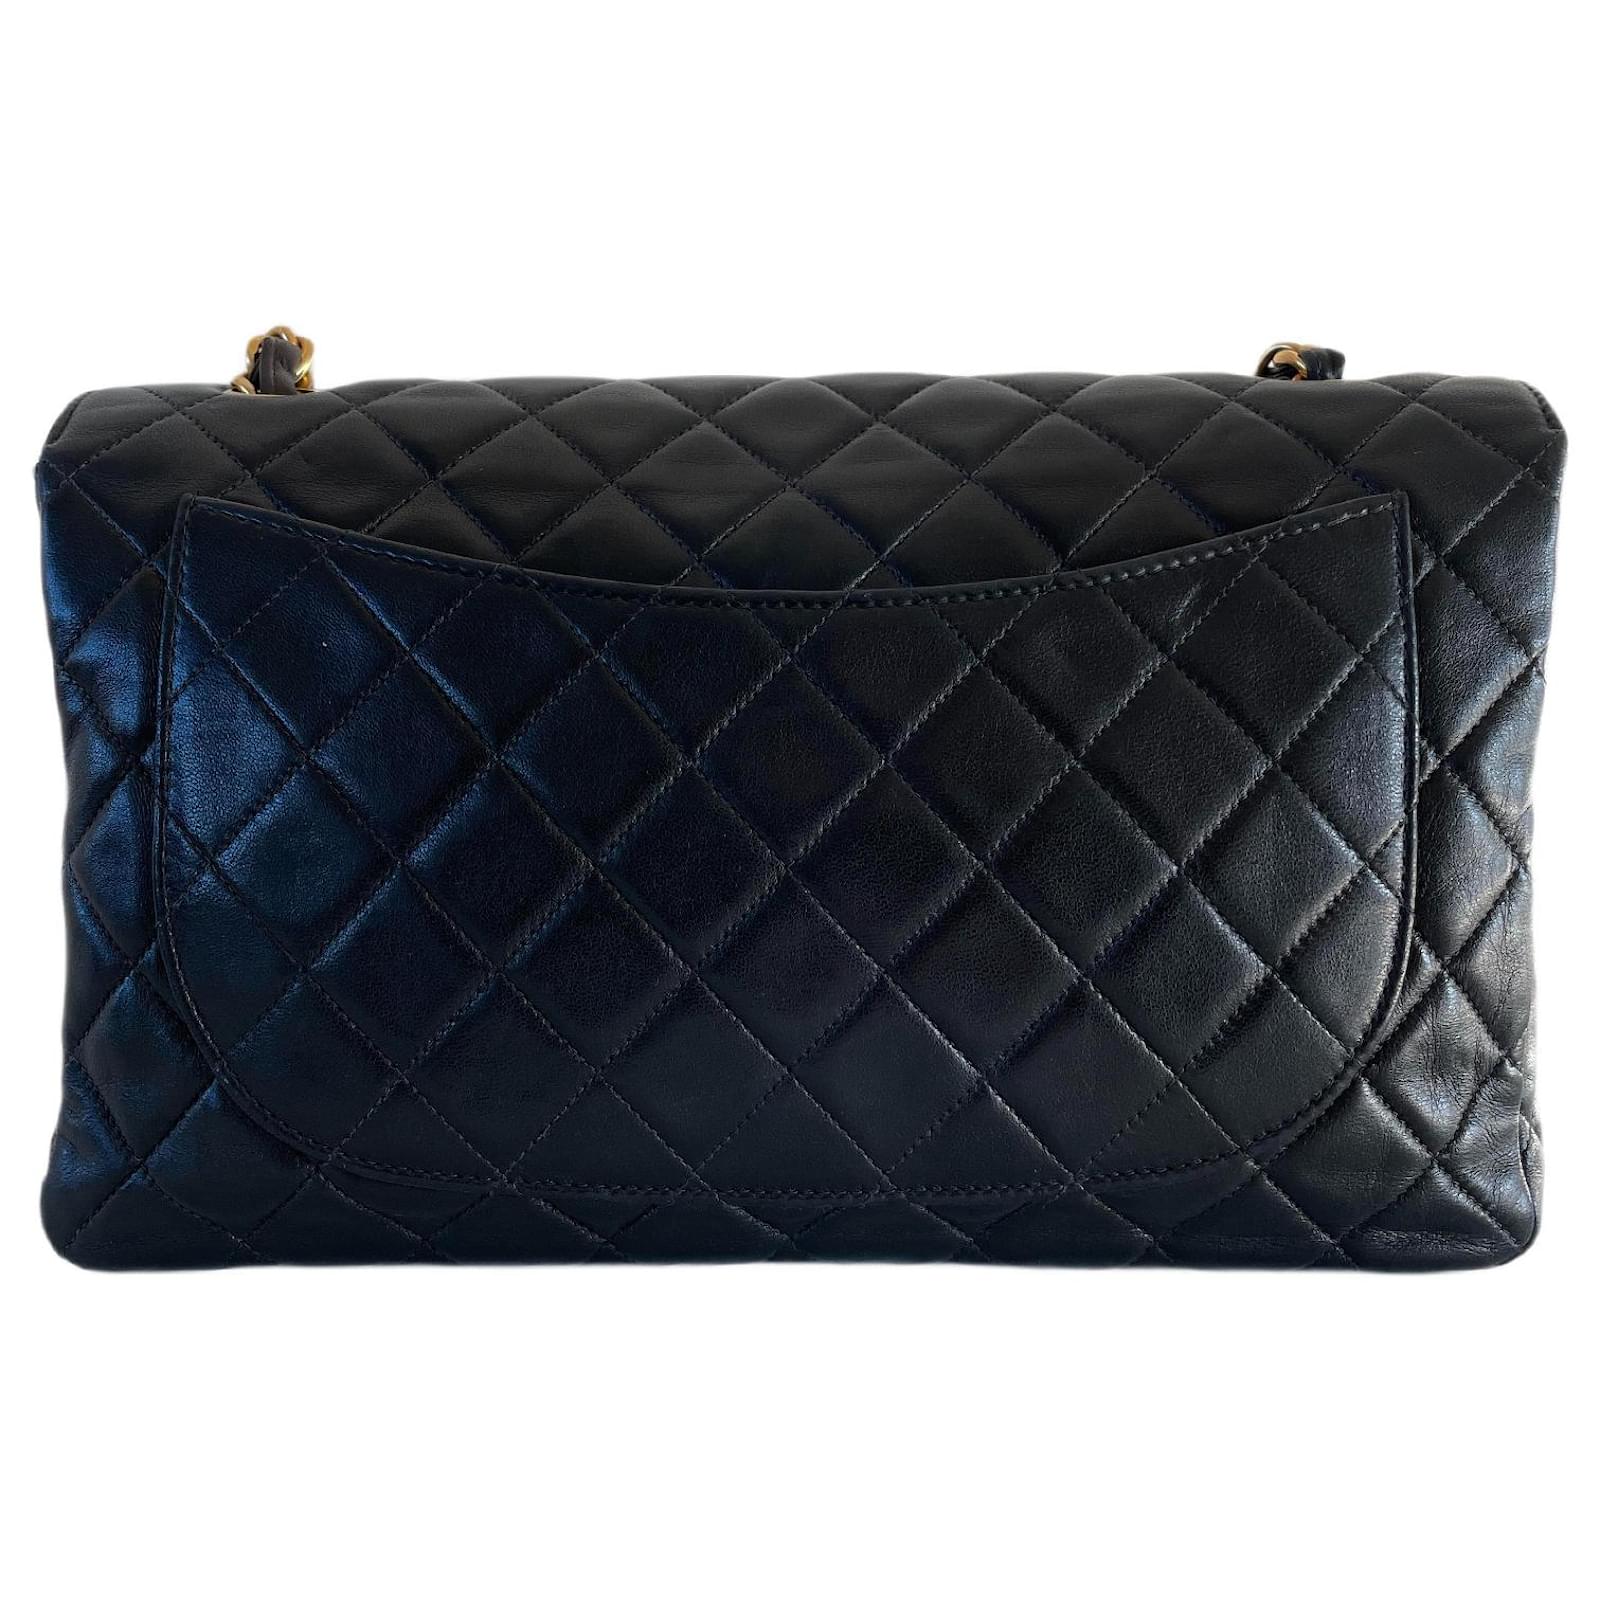 Chanel classic single flap bag jumbo black lambskin gold hardware